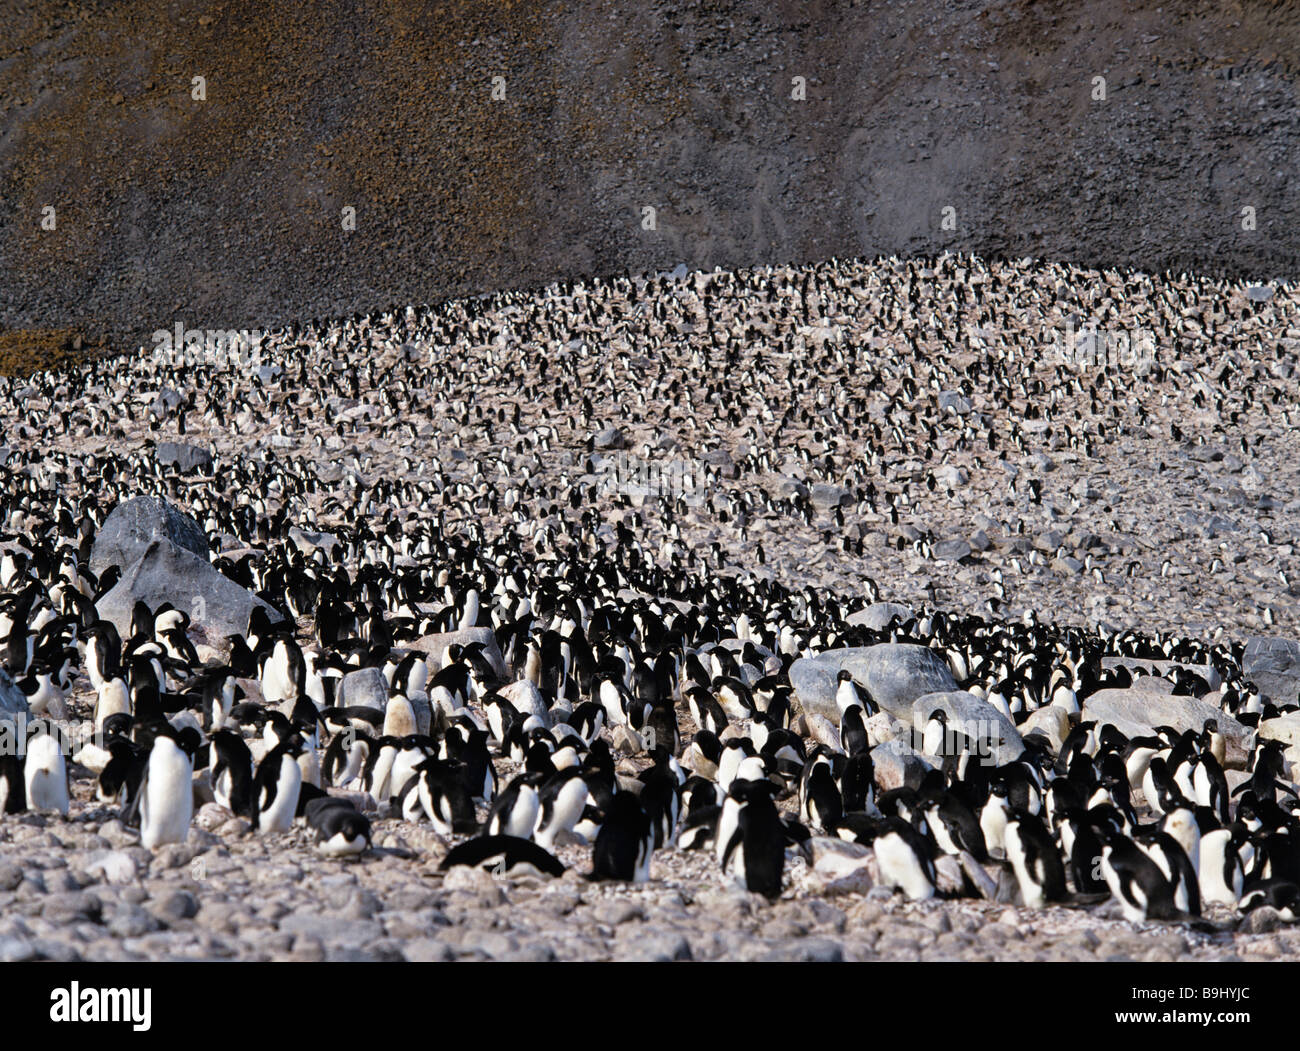 Los pingüinos Adelia (Pygoscelis adeliae), colonia de pingüinos antárticos, Foto de stock